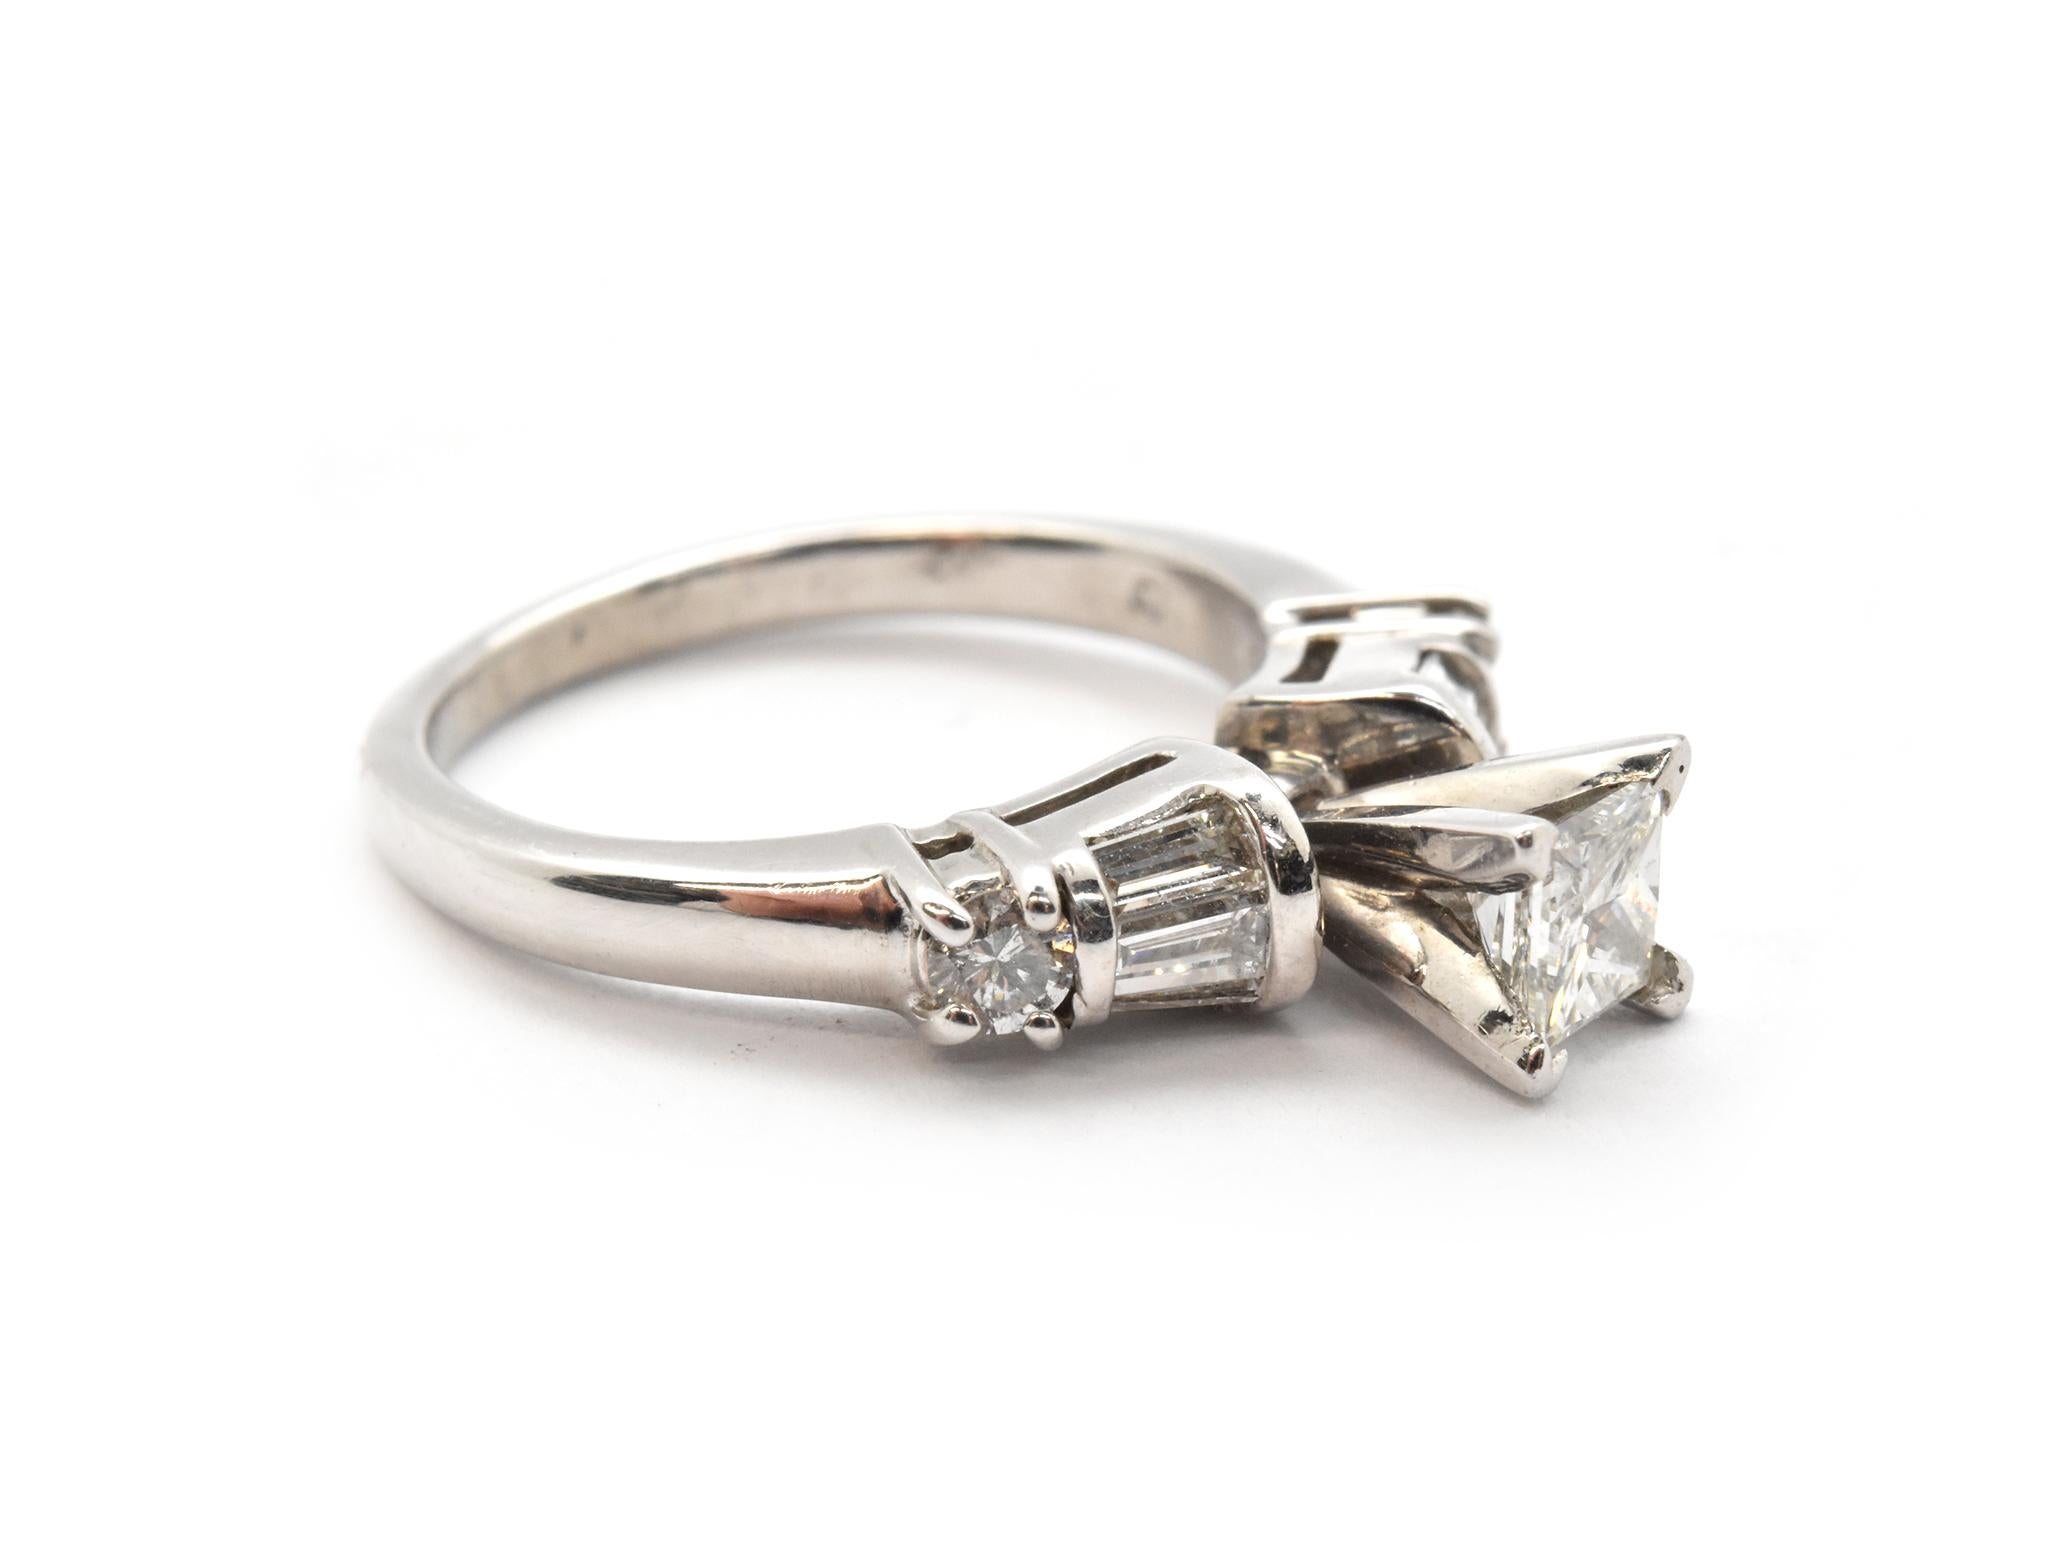 Designer: custom design
Material: platinum
Center Stone: princess cut 0.40 carat diamond
Color: H
Clarity: SI
Accent Diamonds: 0.24 carat weight
Total Carat Weight: 0.64 carat total weight
Ring Size: 8 1/2 
Dimensions: ring top is 4.37mm